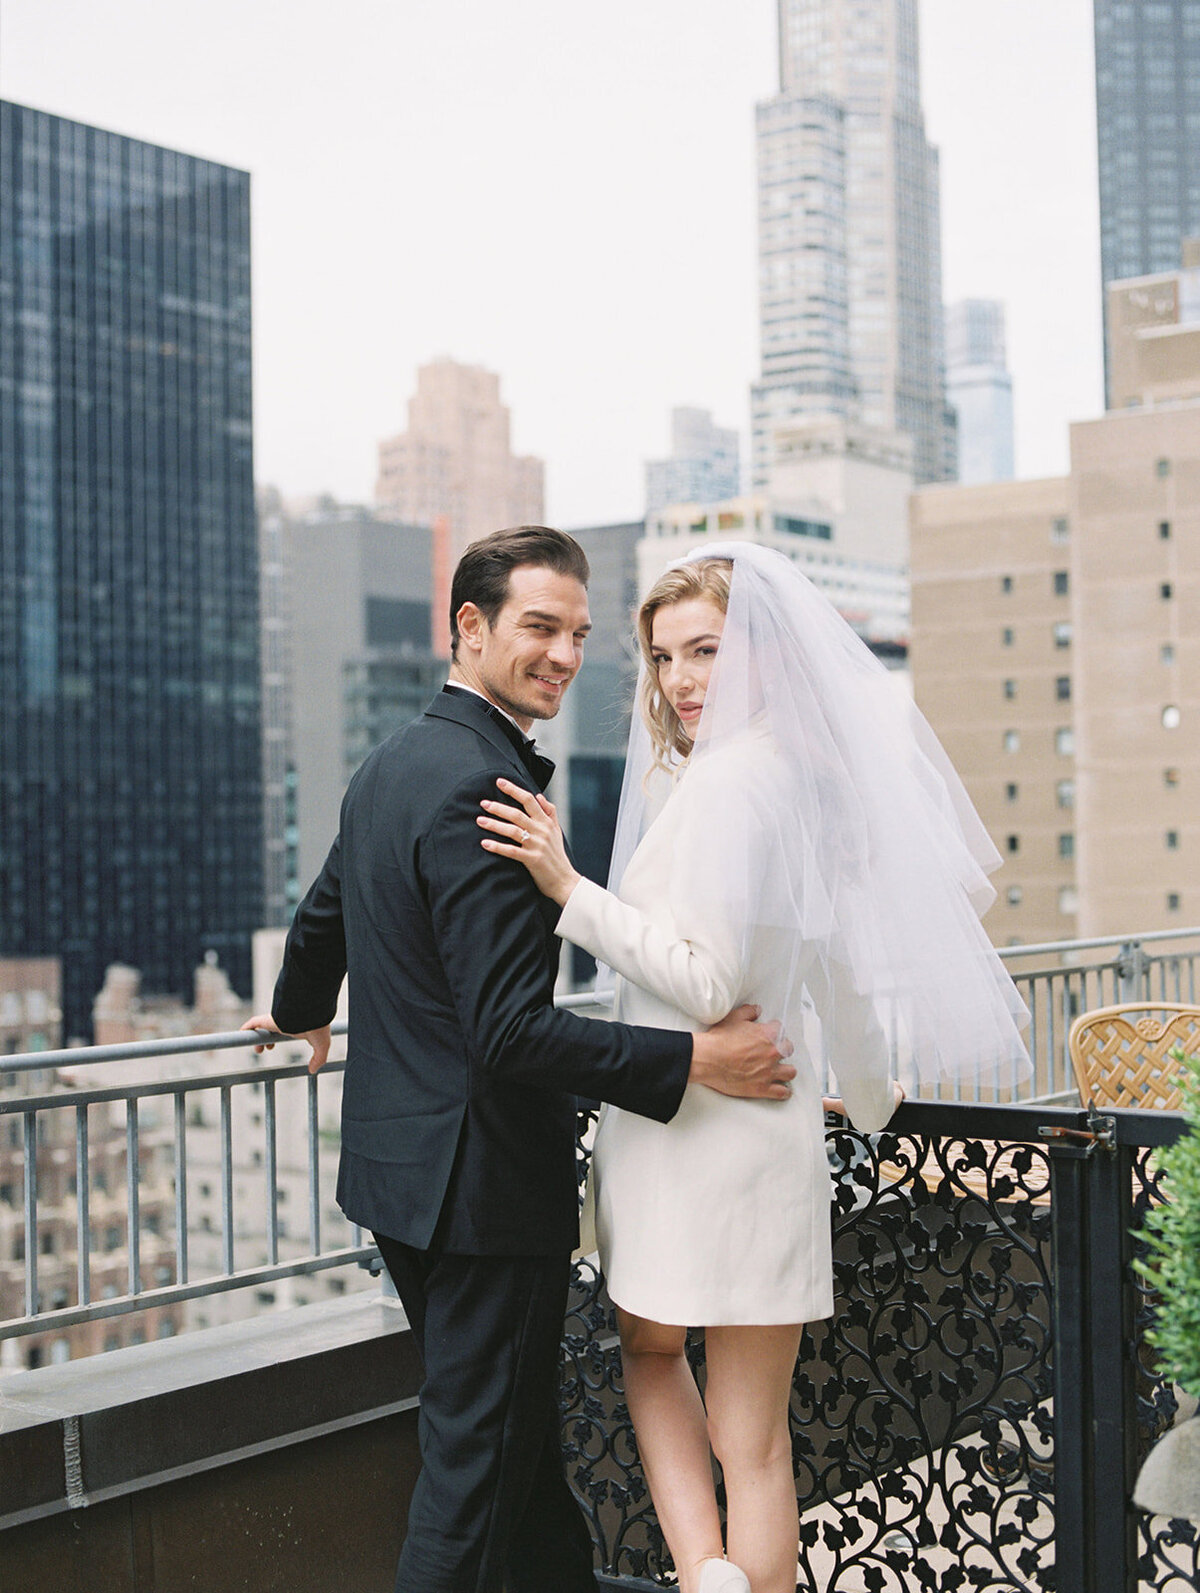 The Plaza Hotel - New York City - Elopement Wedding - Stephanie Michelle Photography - _stephaniemichellephotog - 3-R1-E006